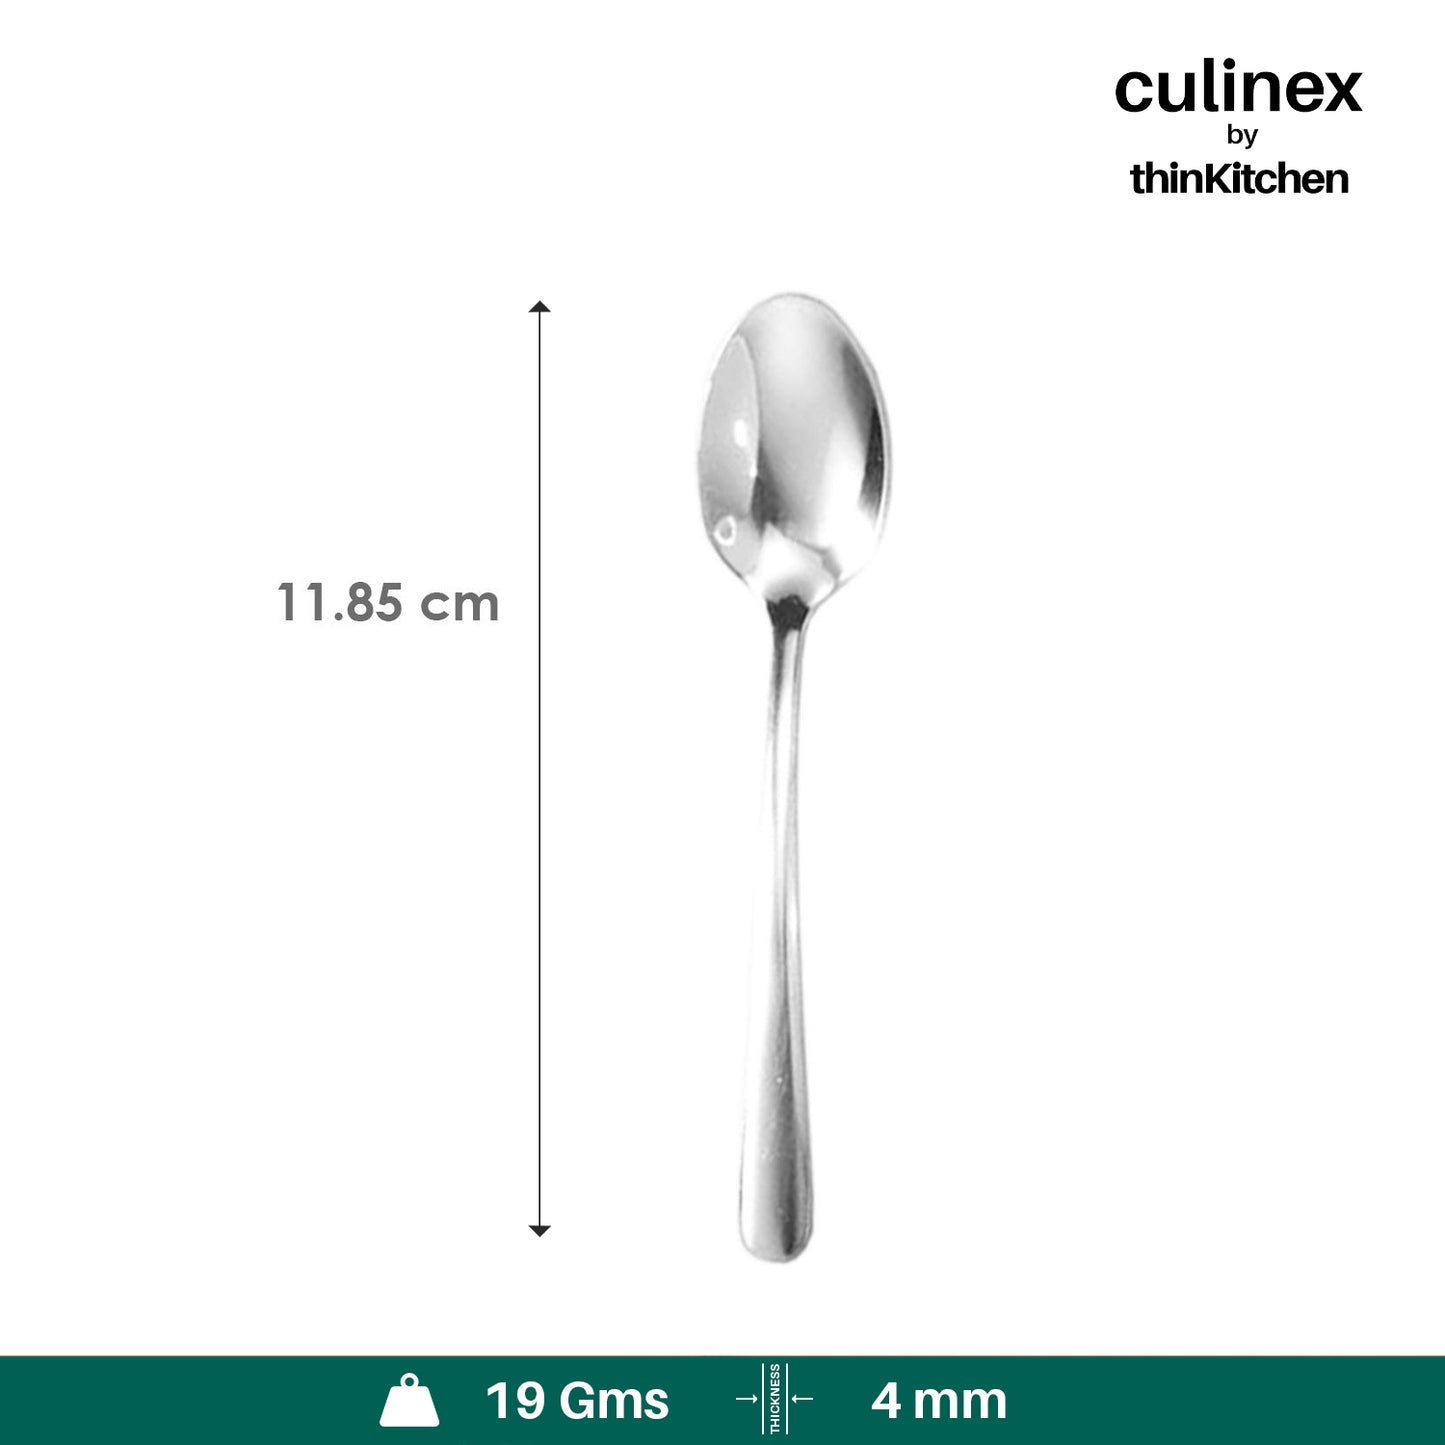 Culinex By Thinkitchen Dora Coffee Spoon Mirror Finish Set Of 6